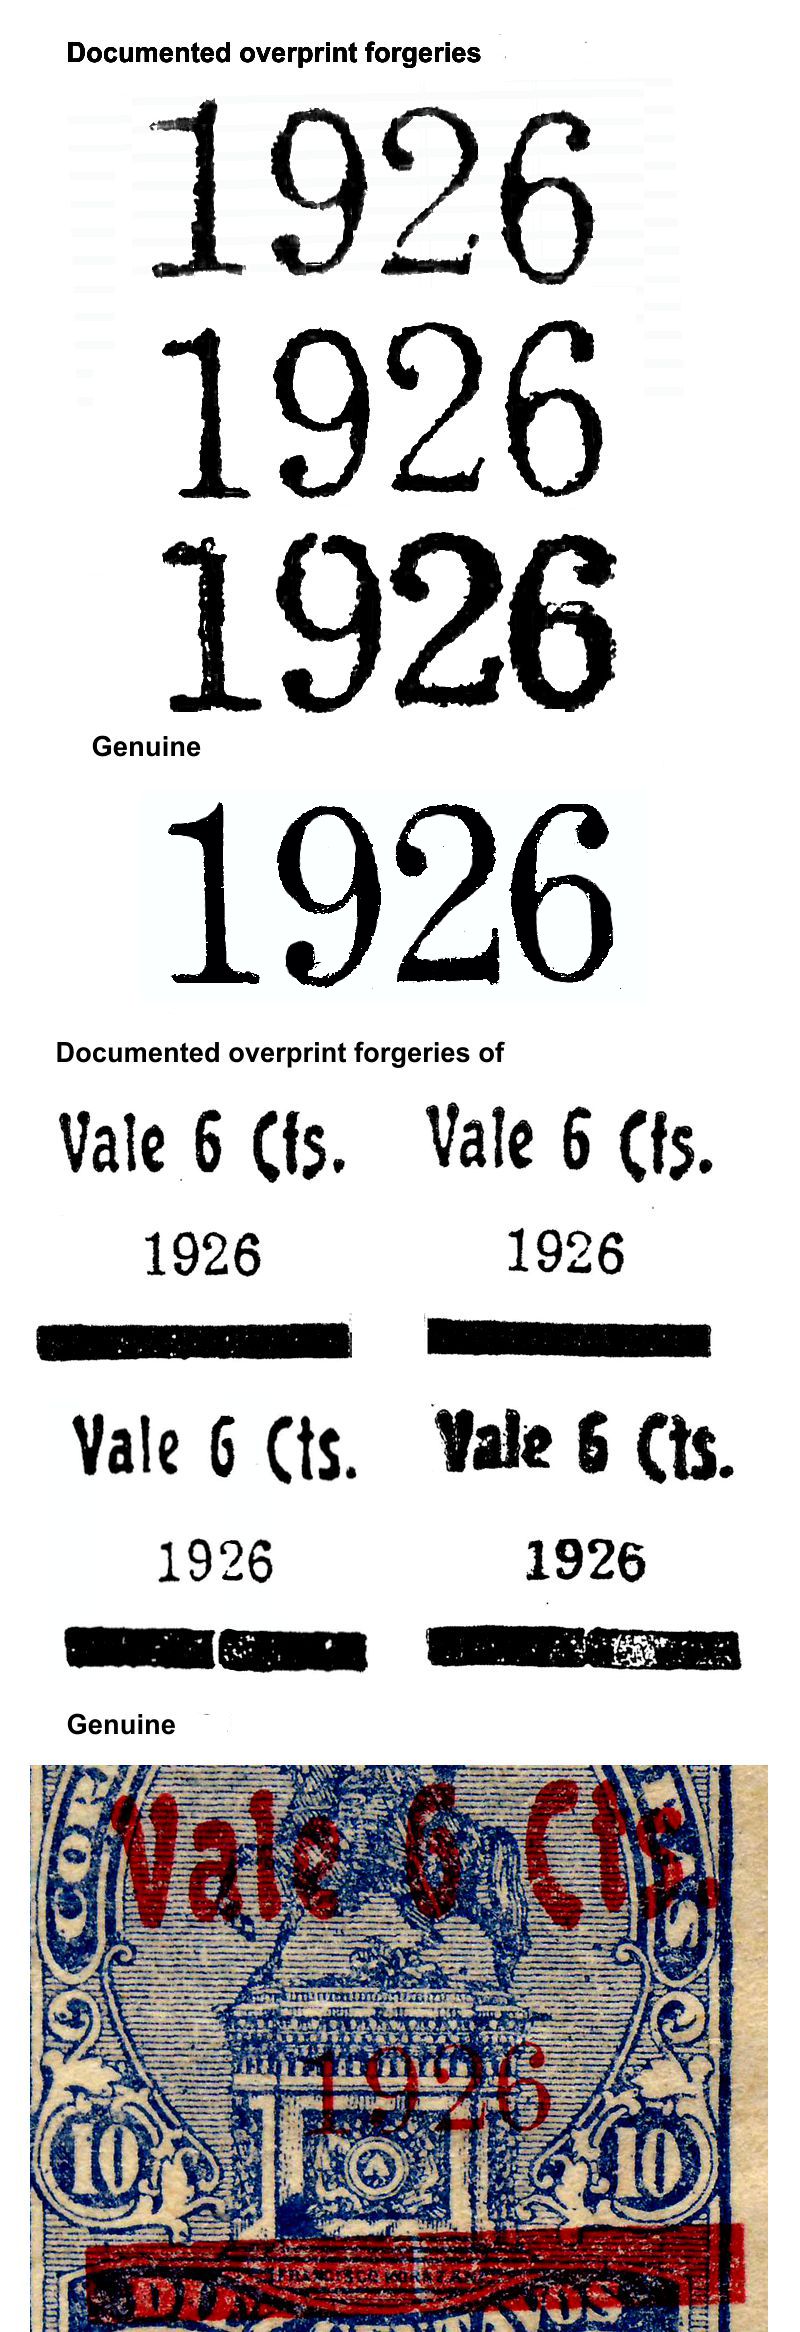 1926 overprint forgeries